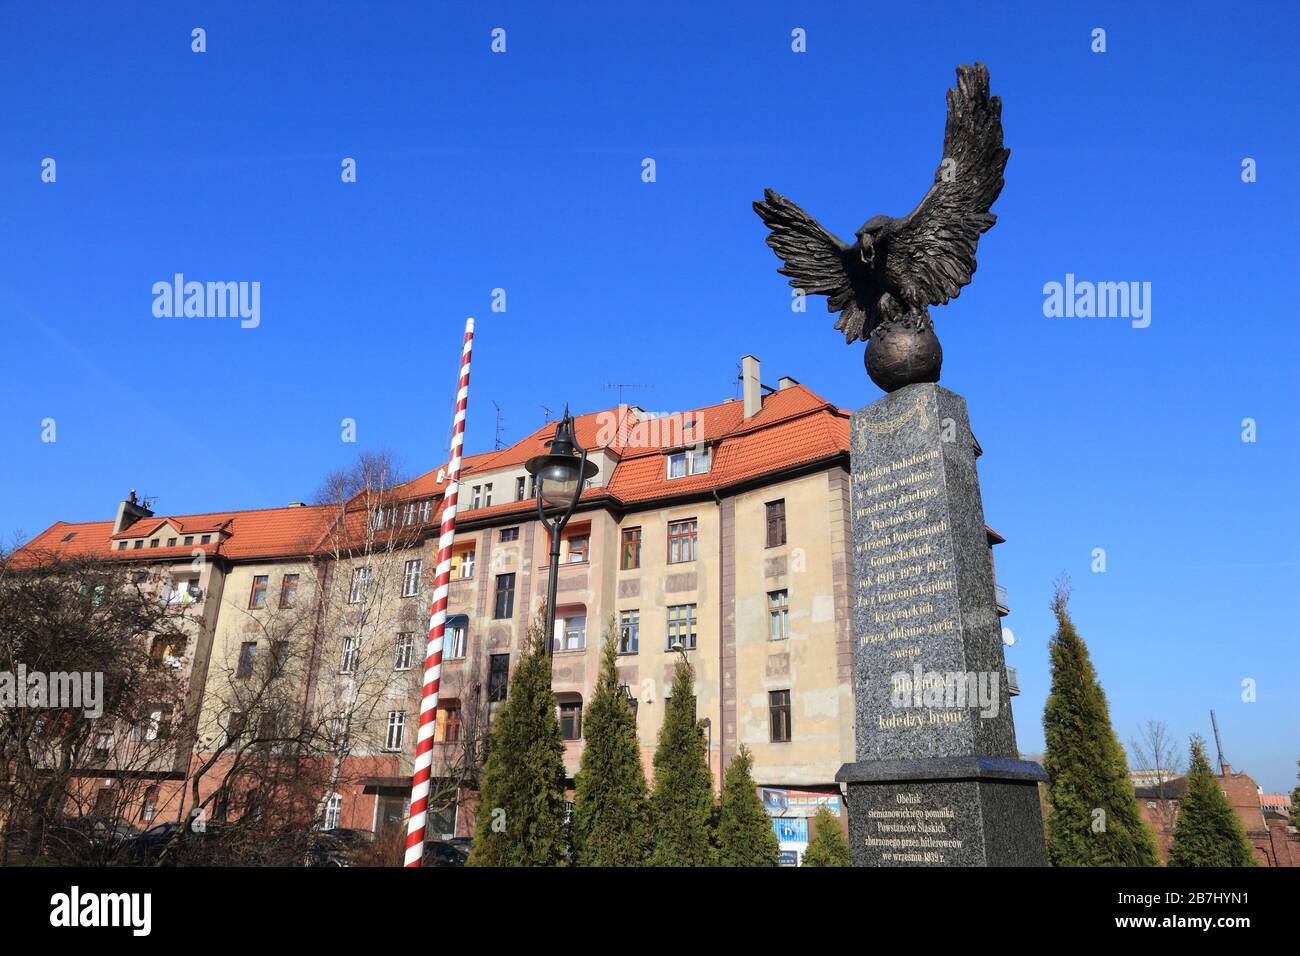 SIEMIANOWICE SLASKIE, POLAND - MARCH 9, 2015: Monument to Silesian Uprisings (Powstania Slaskie) in Siemianowice Slaskie, Poland. It is located on for Stock Photo